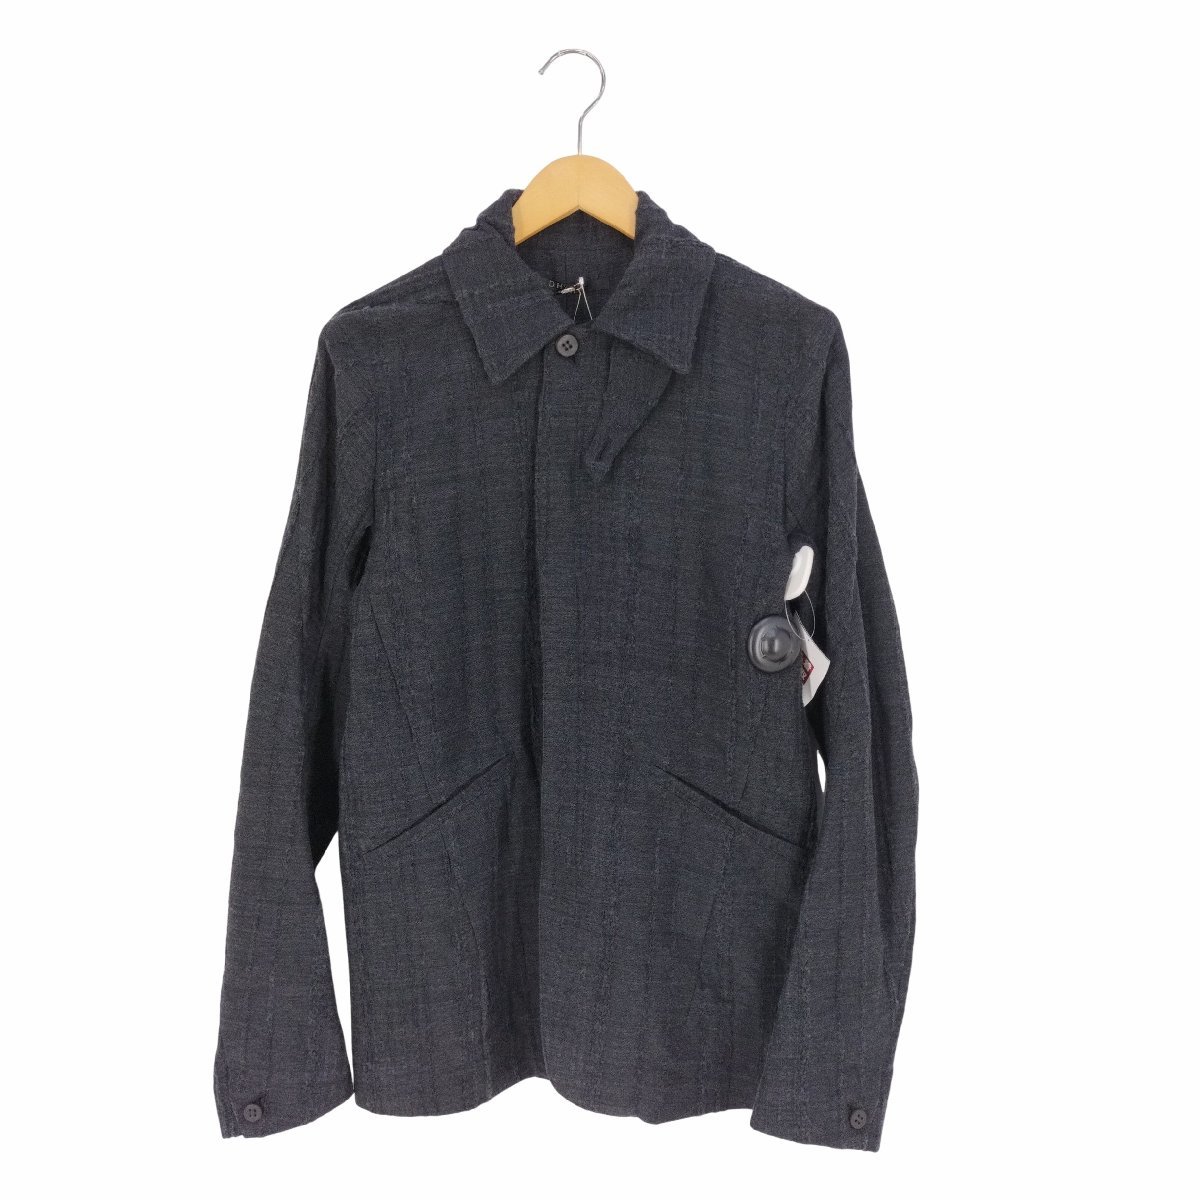 D.HYGEN(ディーハイゲン) Wool Rayon Jacquard stripe jacket メン 中古 古着 0223